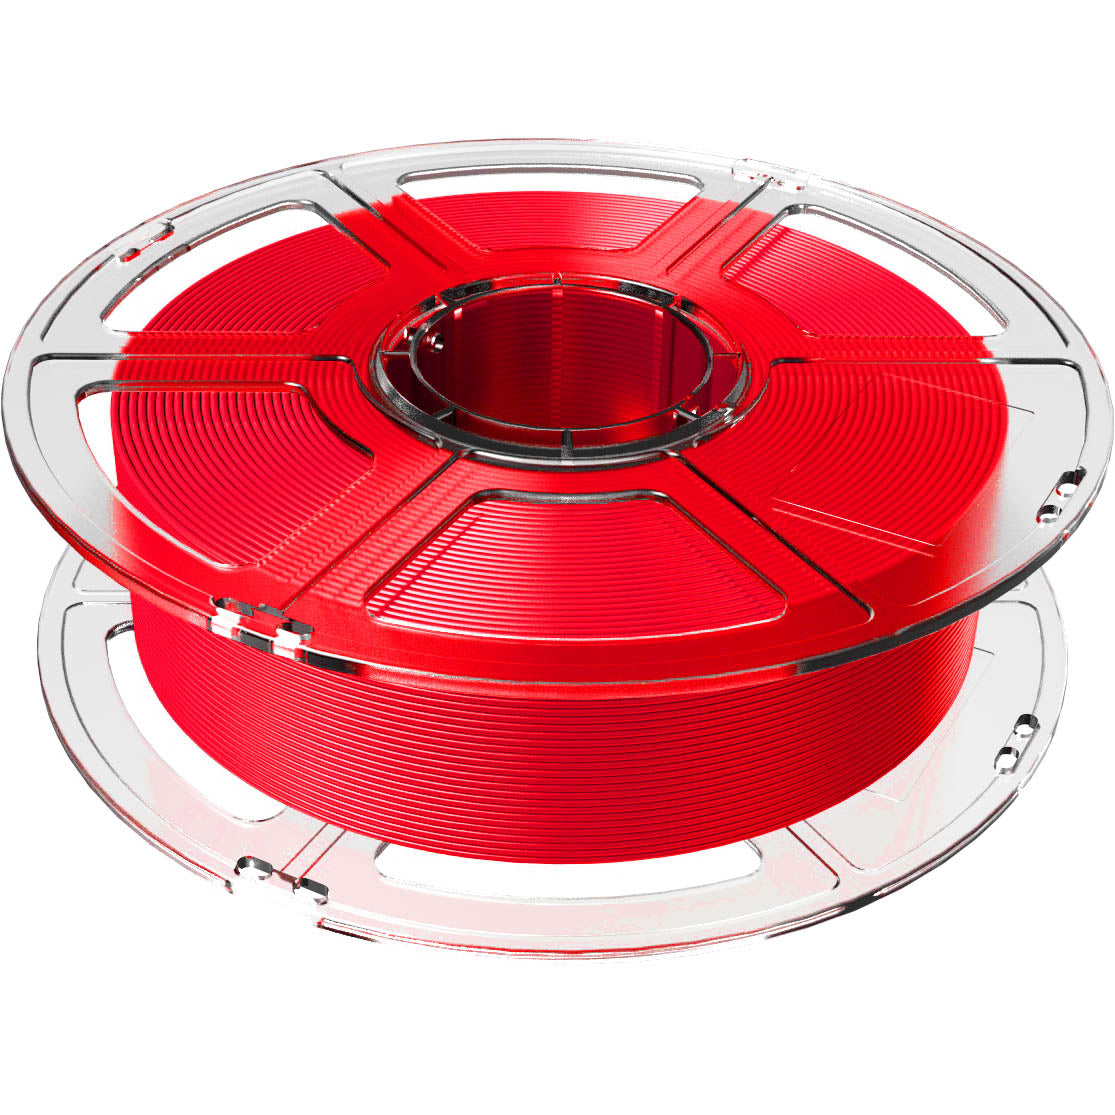 Jelly Bean PLA Pro 1kg Red 1.75mm Filament Spool